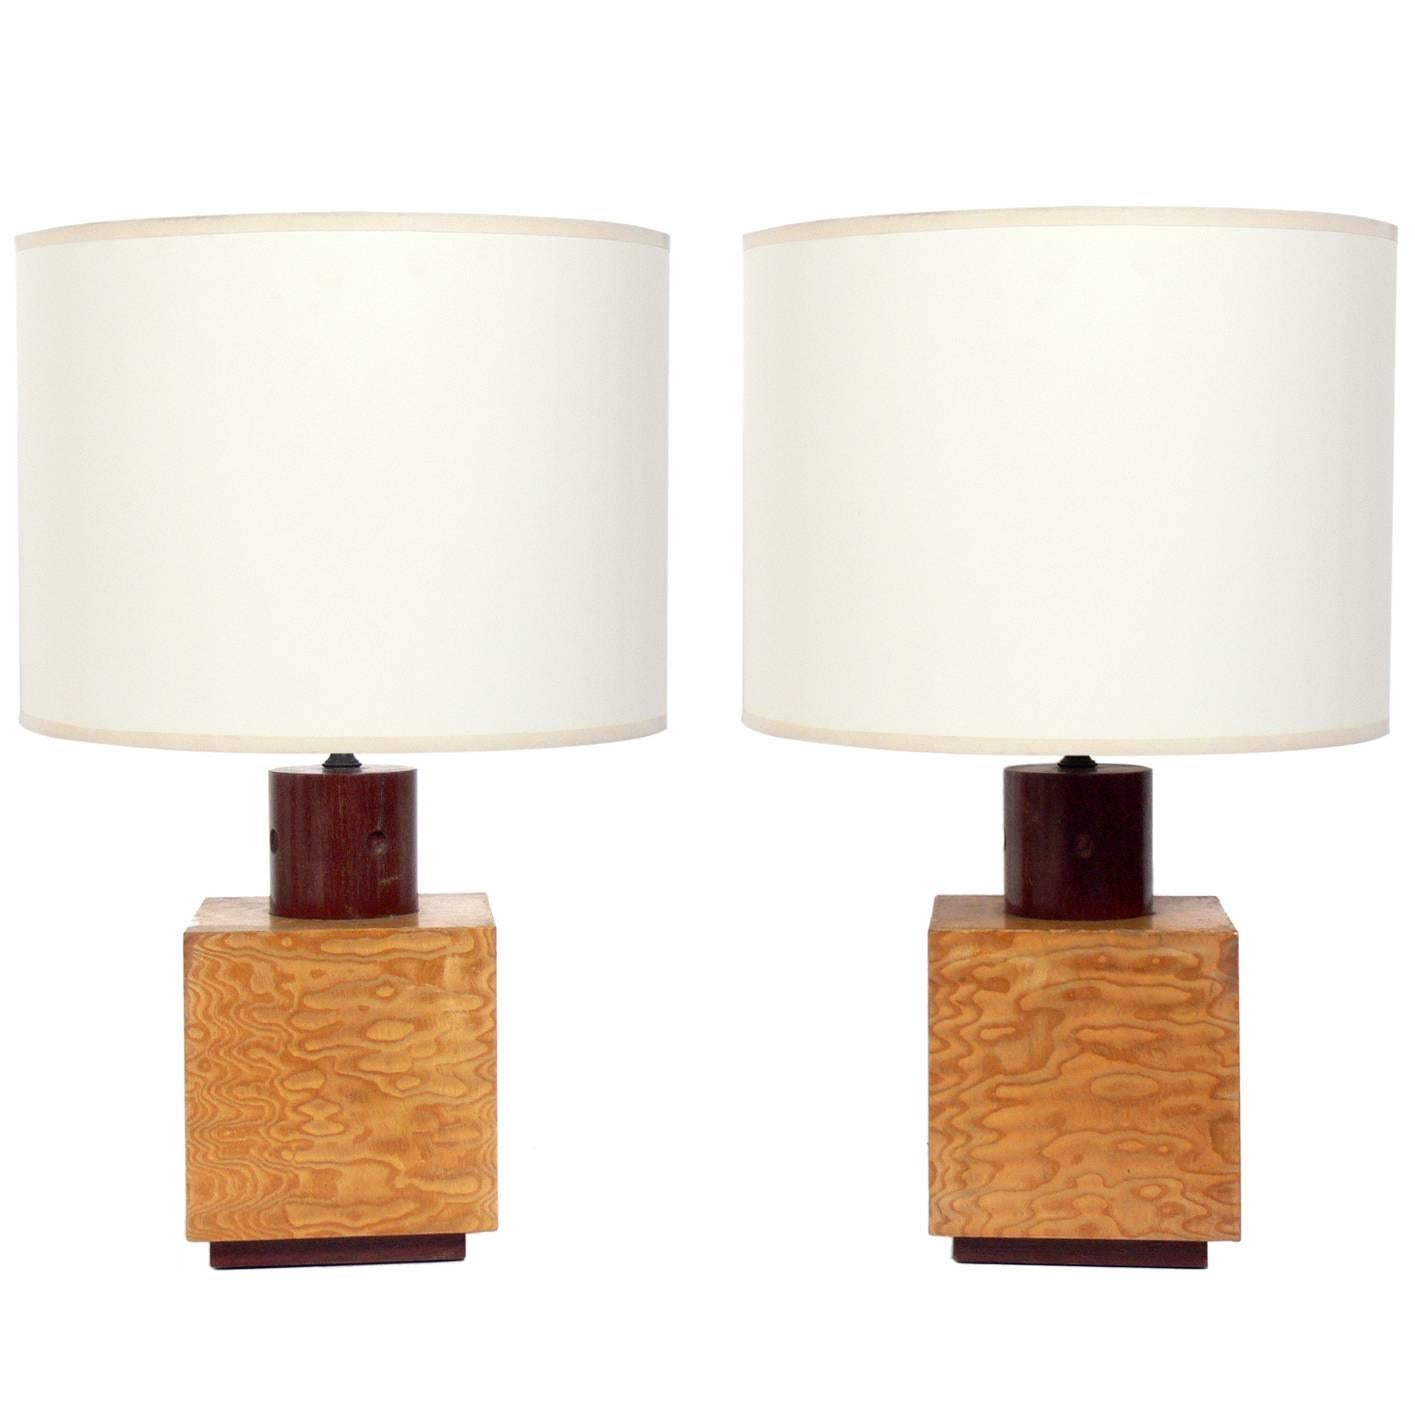 Pair of Burl Wood Cube Lamps by Andrew Szoeke